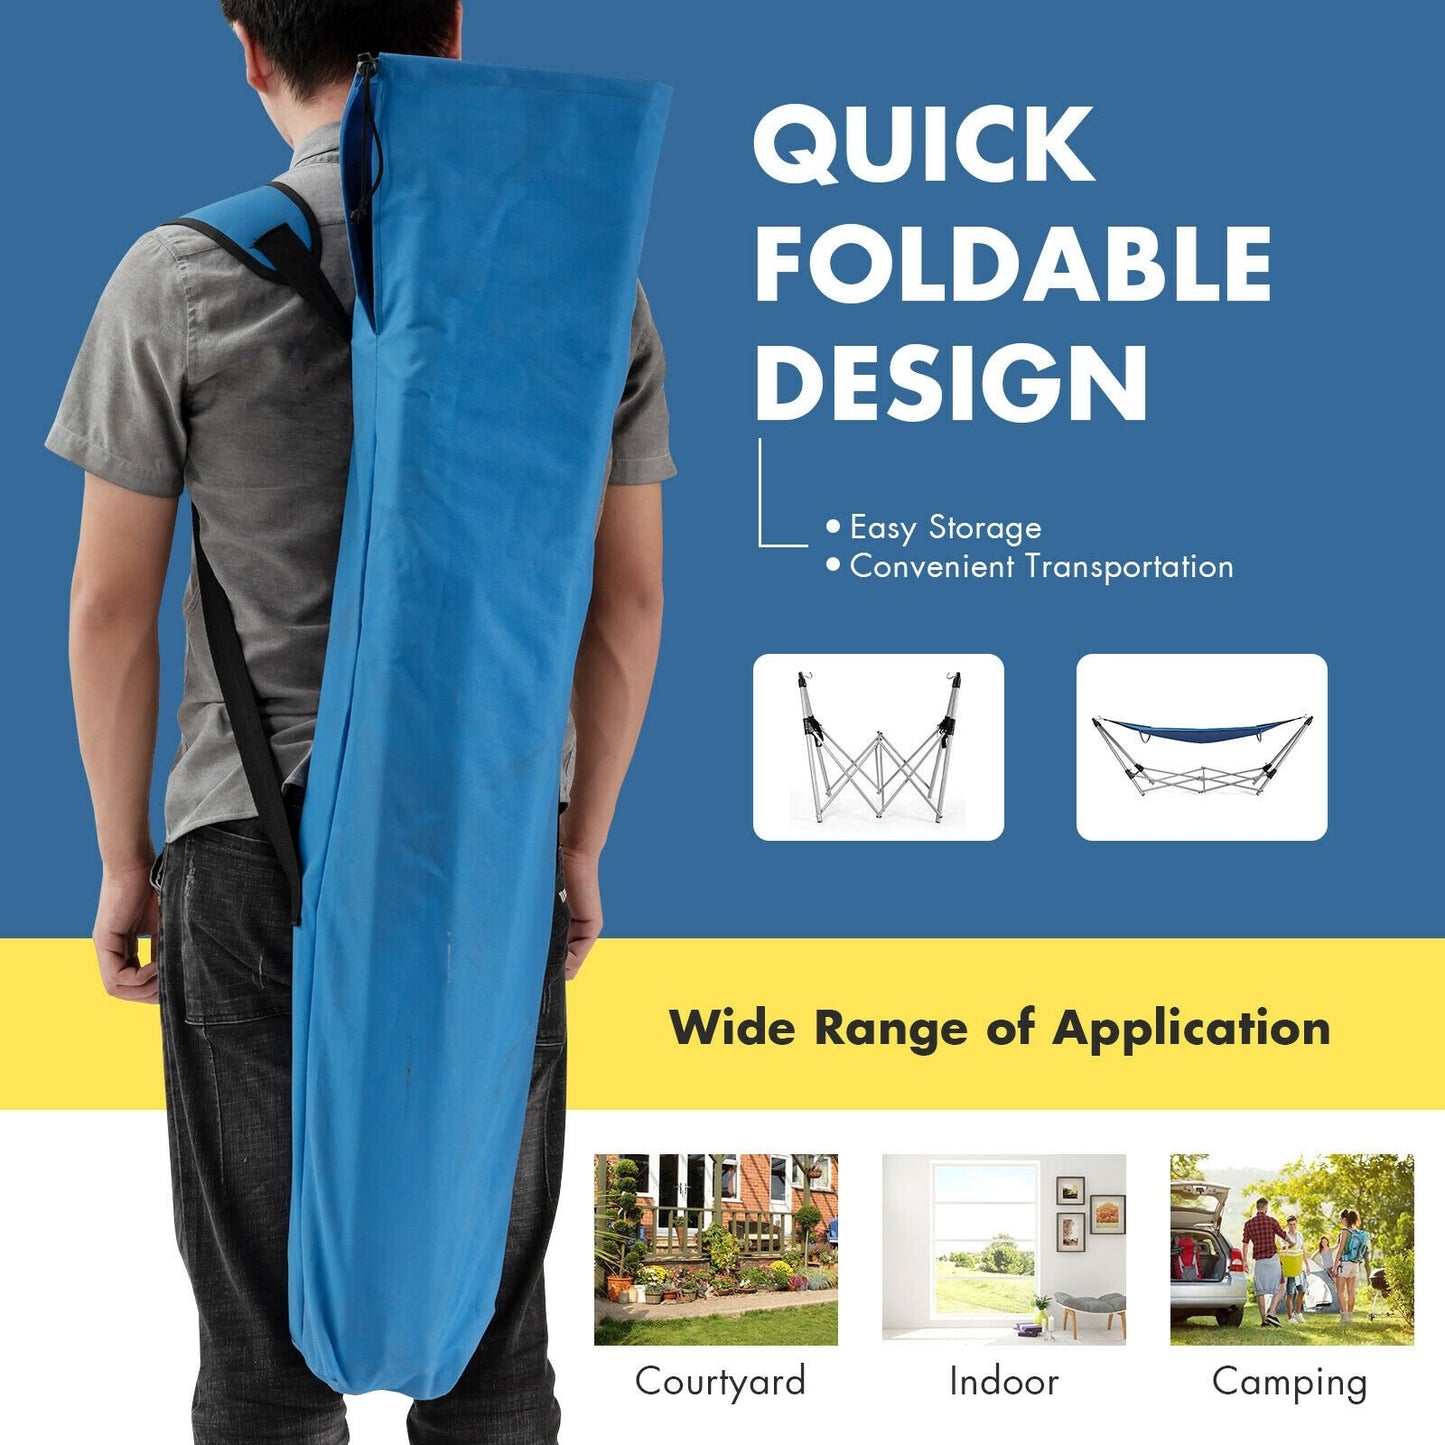 Portable Folding Steel Frame Hammock with Bag, Blue - Gallery Canada